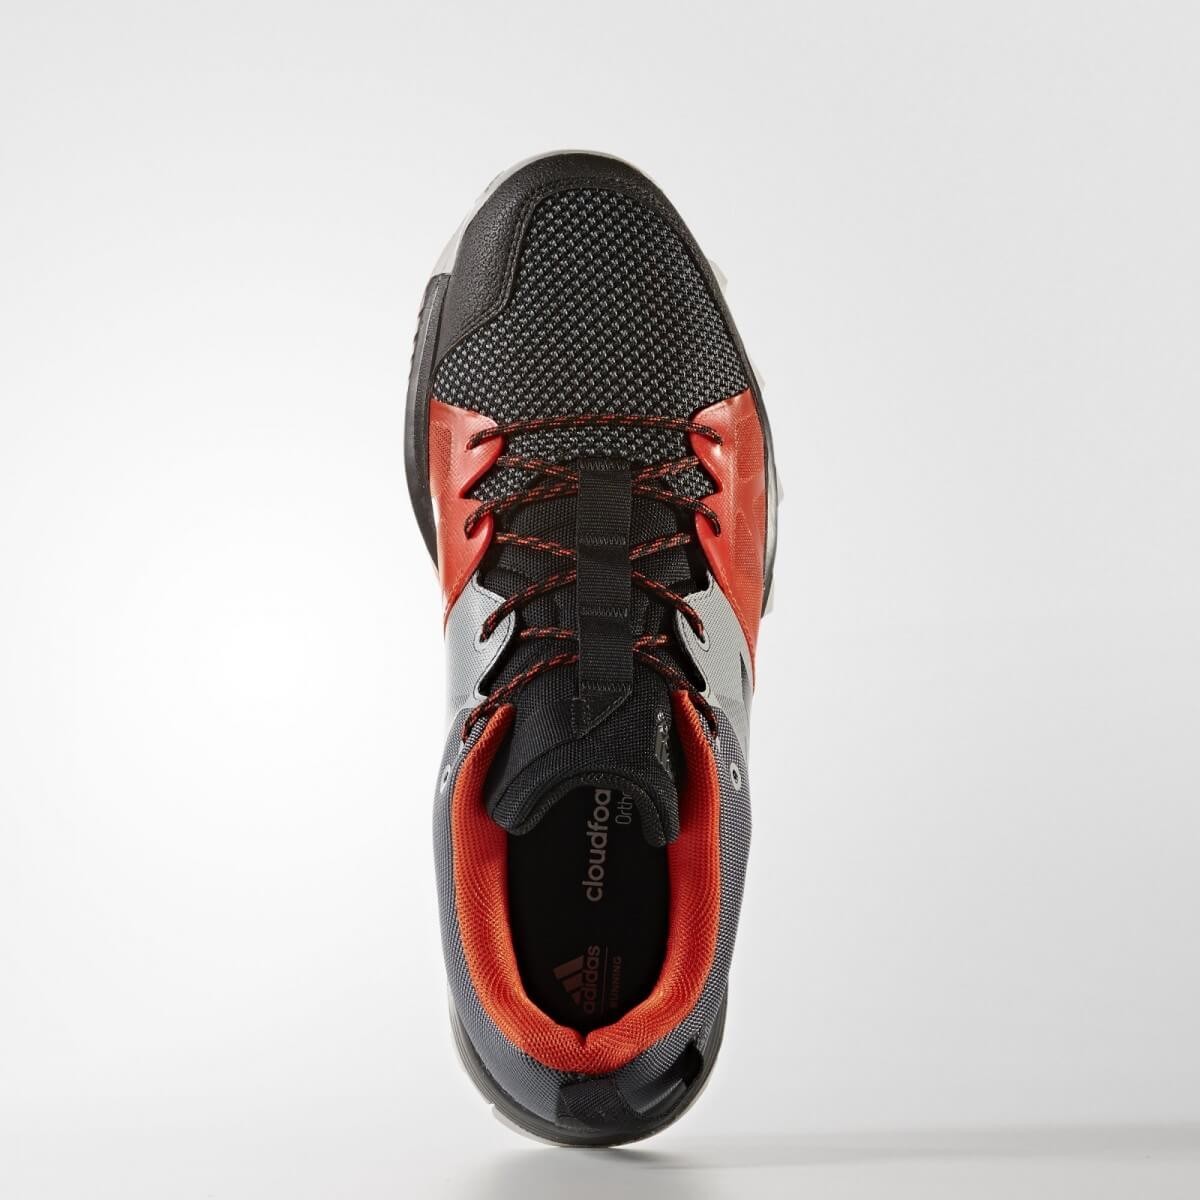 sello Son hermosa Adidas Kanadia 8.1 Trail Running Shoes black / red - AW17 Men